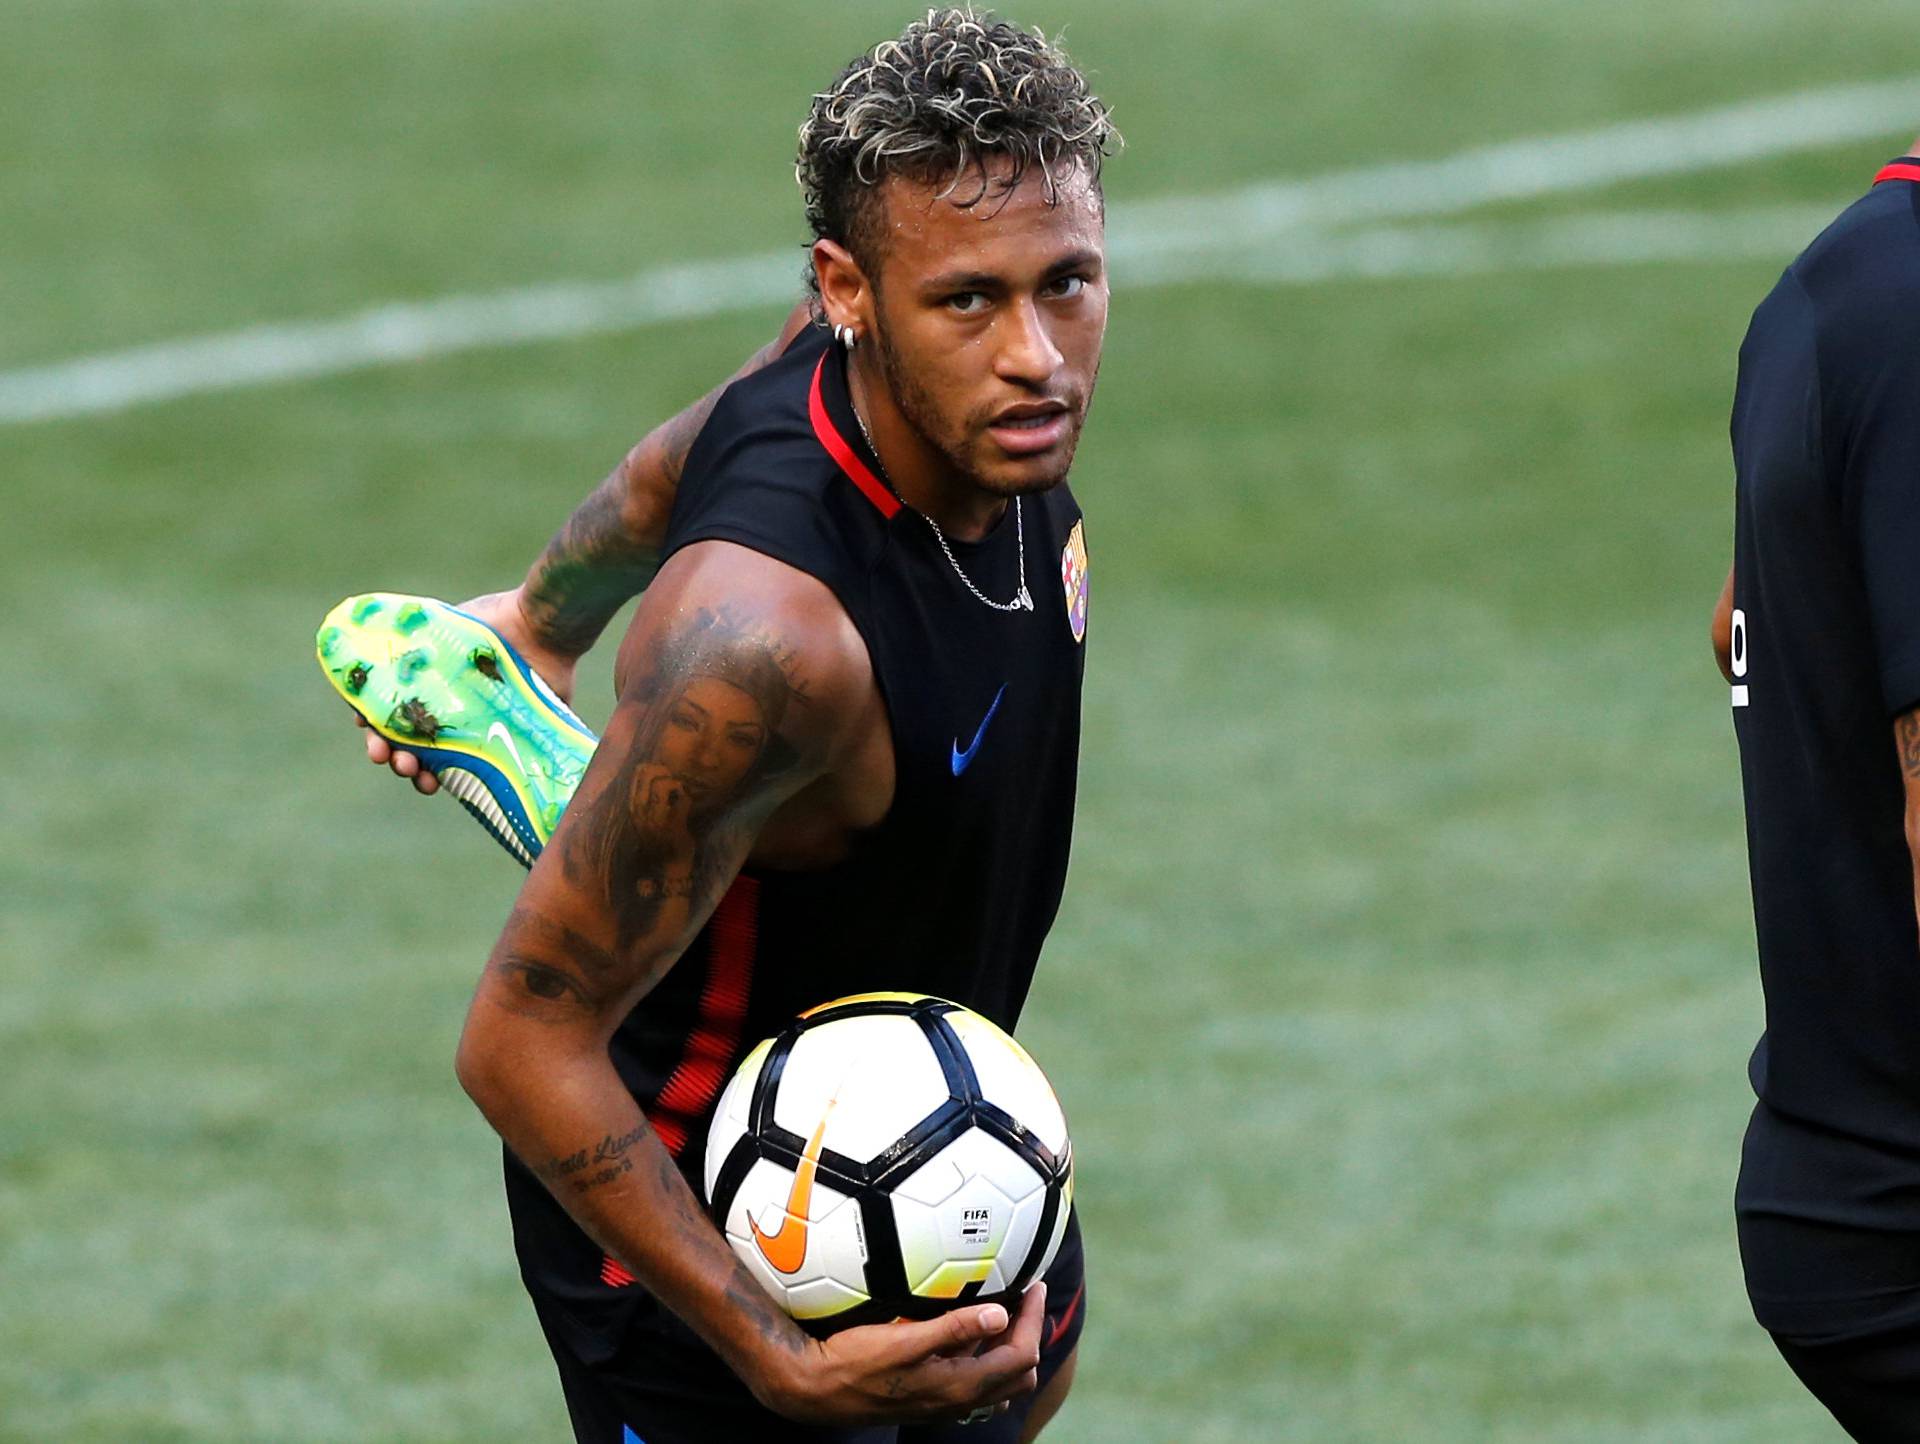 Football Soccer - Barcelona training - Neymar